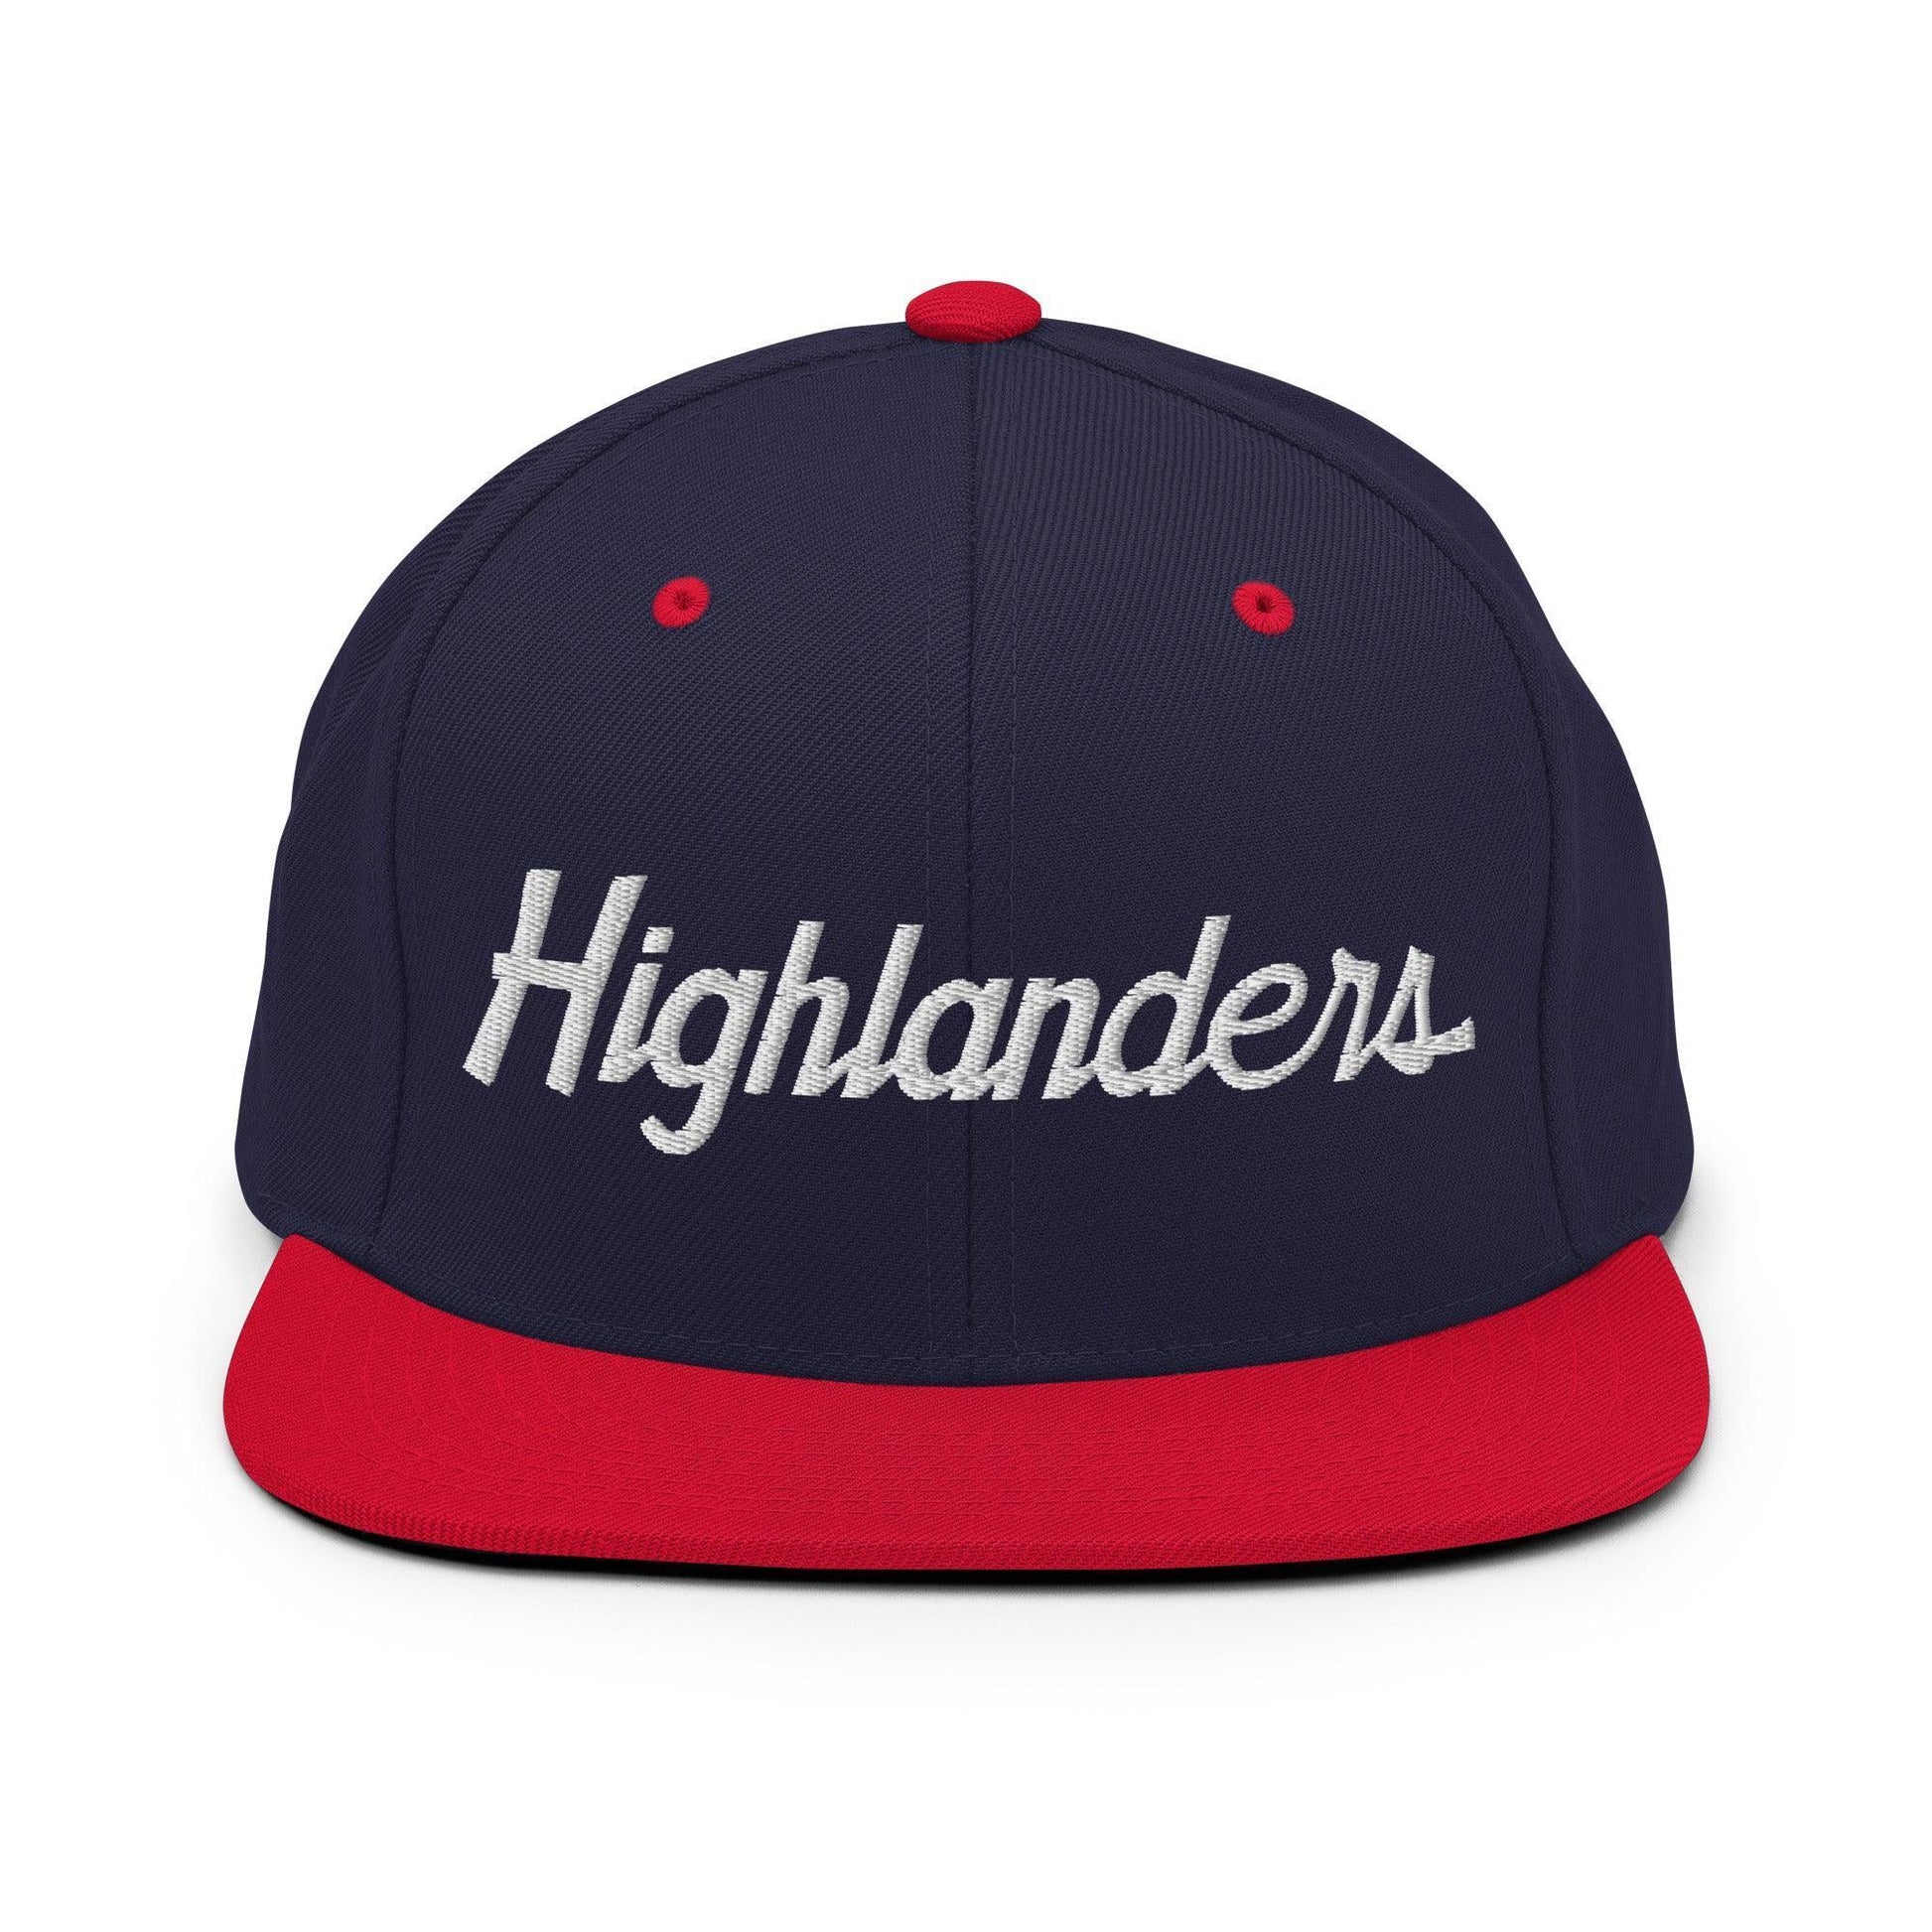 Highlanders School Mascot Script Snapback Hat Navy/ Red